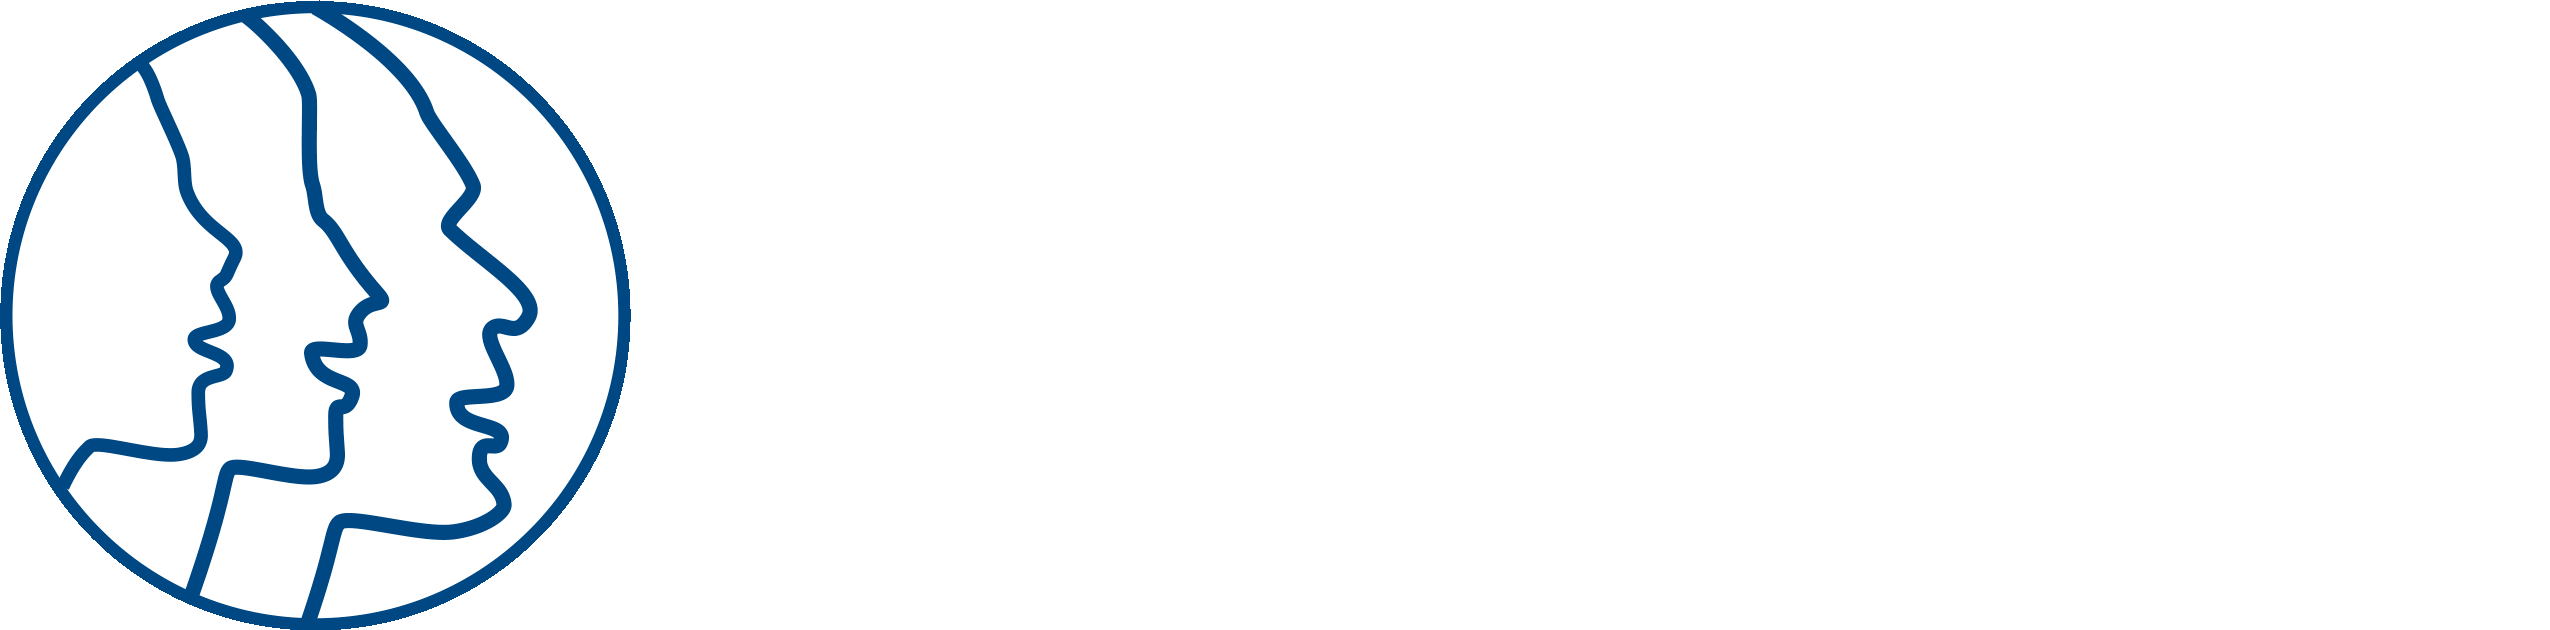 logopedia-logo-napis-biale